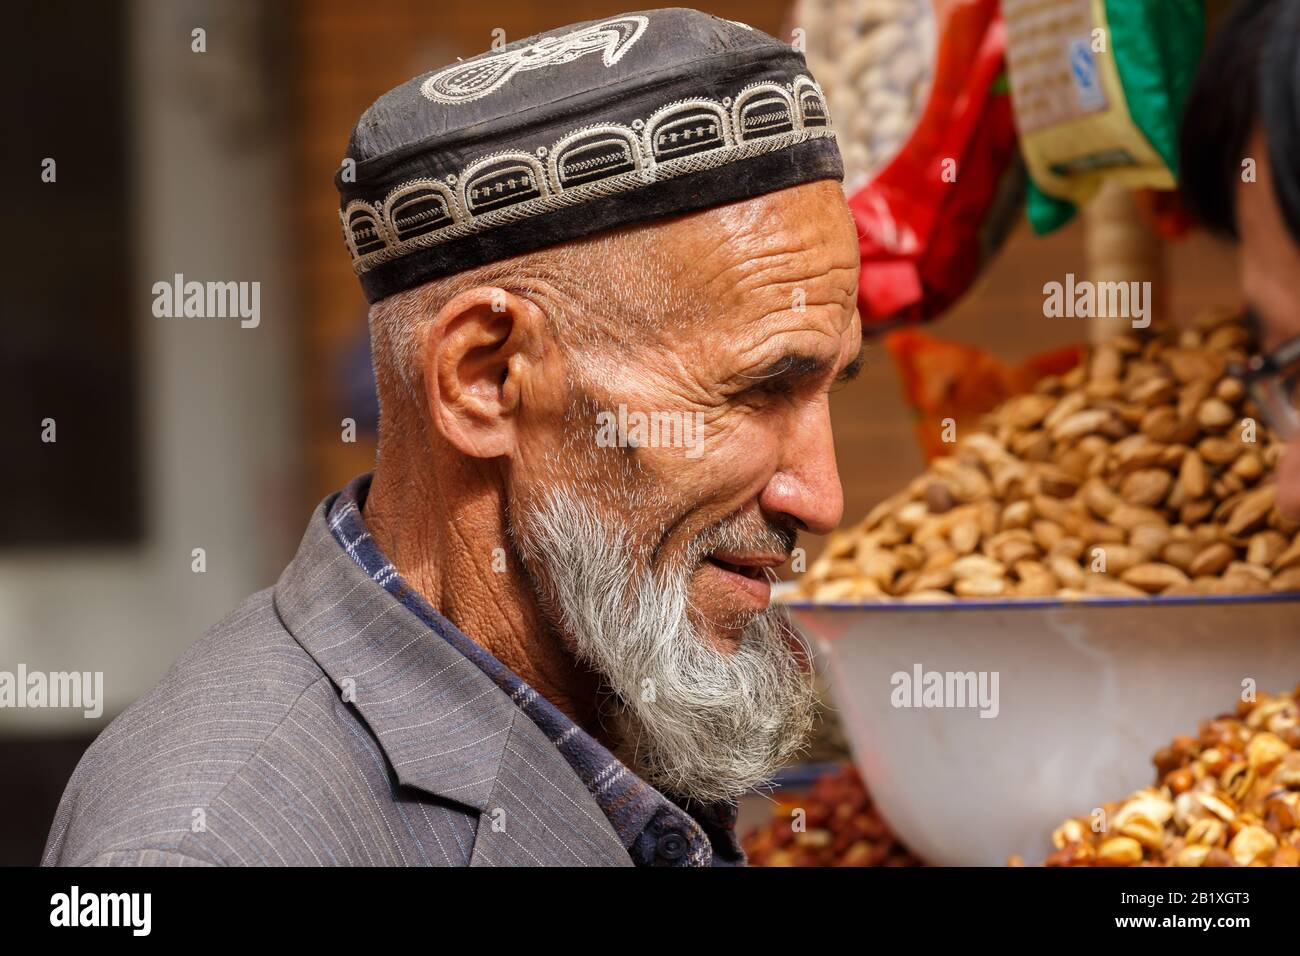 Profile of elderly, uyghur man with long, grey beard. He is wearing a traditional doppa (hat). Muslim uyghur minority in Xinjiang / China. Stock Photo